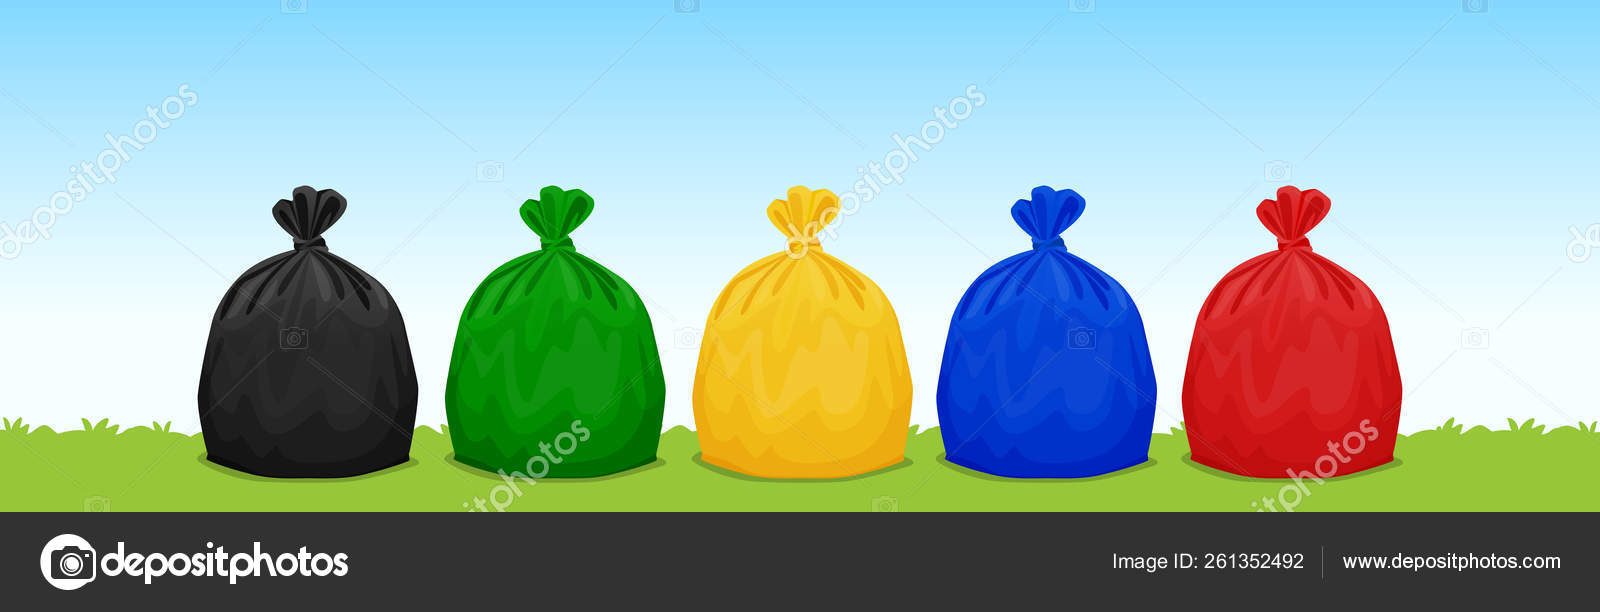 https://st4.depositphotos.com/16940446/26135/v/1600/depositphotos_261352492-stock-illustration-plastic-waste-bags-black-green.jpg